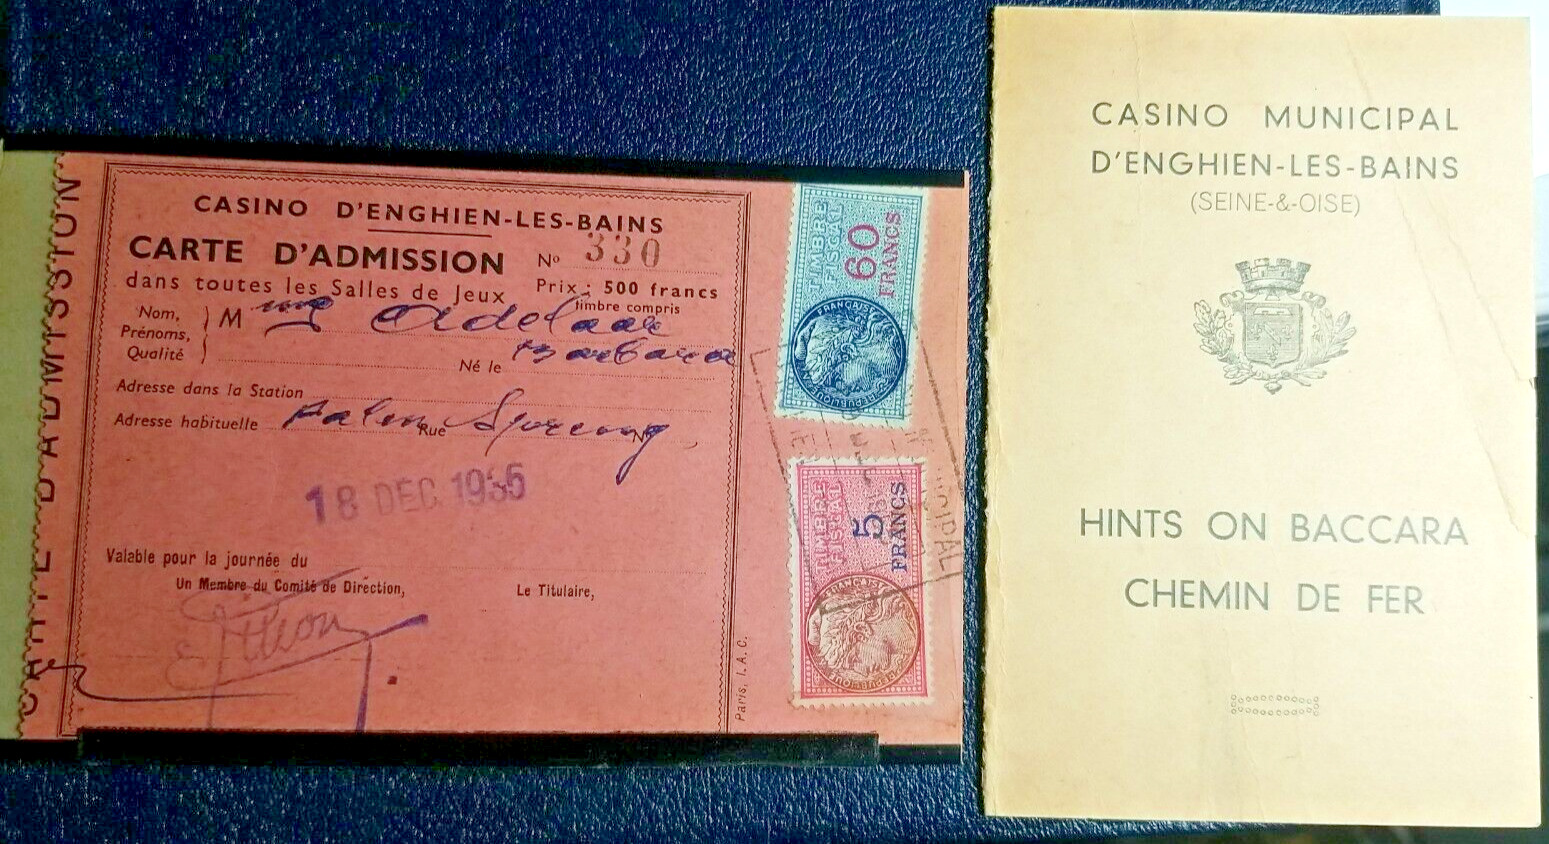 Casino Municipal D\'Enghien-Les-Bains 1935 Entry Card & Hints on Baccara Brochure